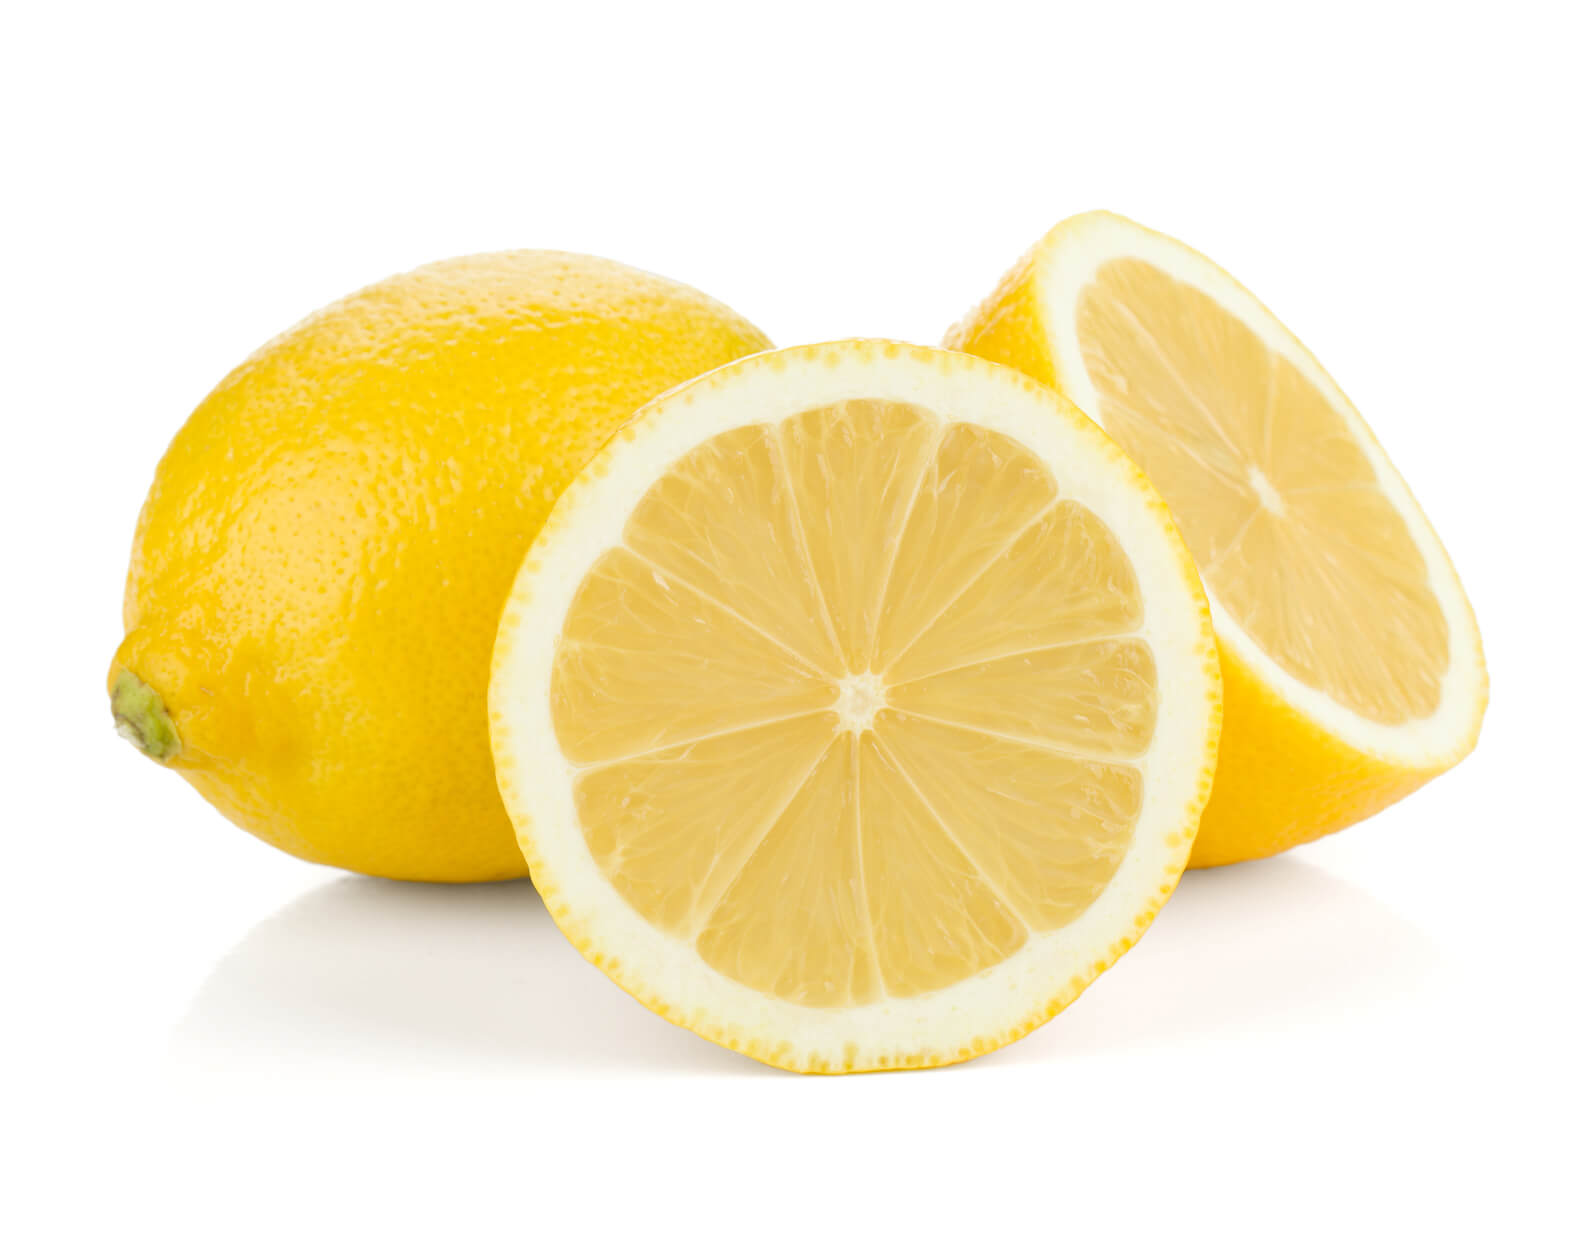 Health benefits of eating lemons